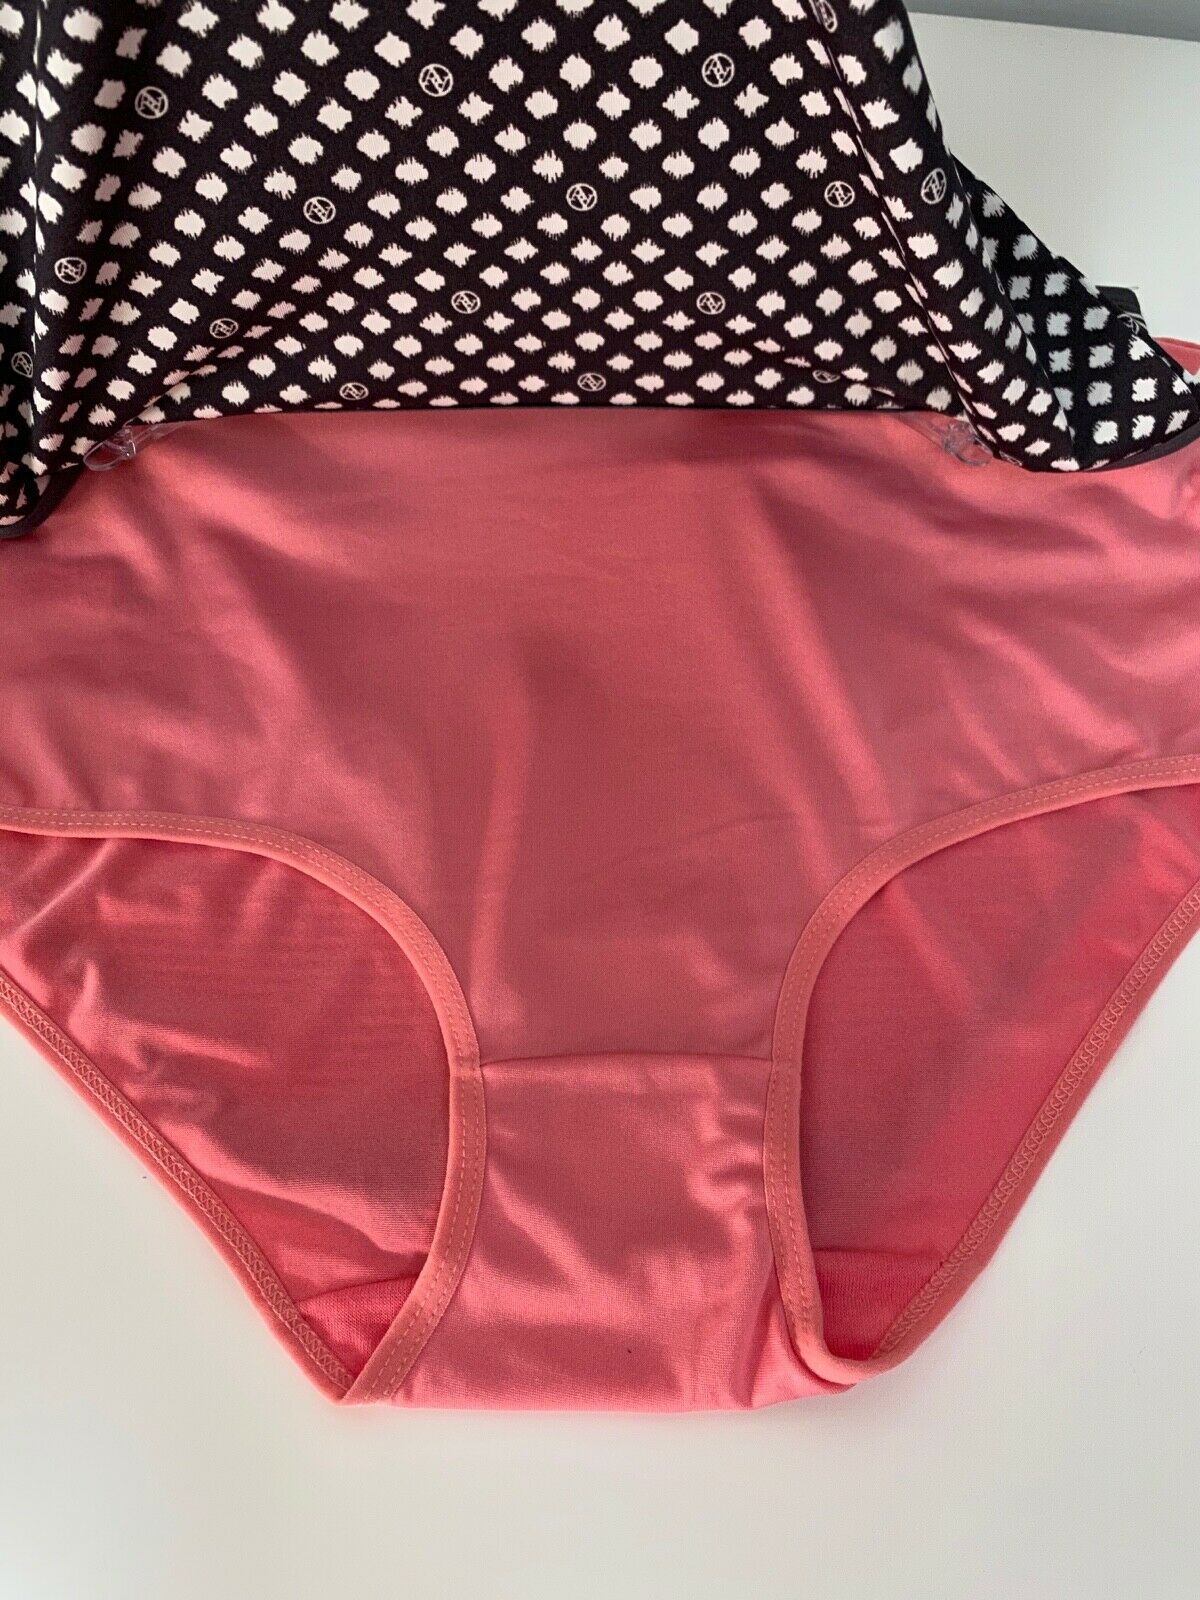 Adrienne Vittadini Panties Briefs 2X - Panties